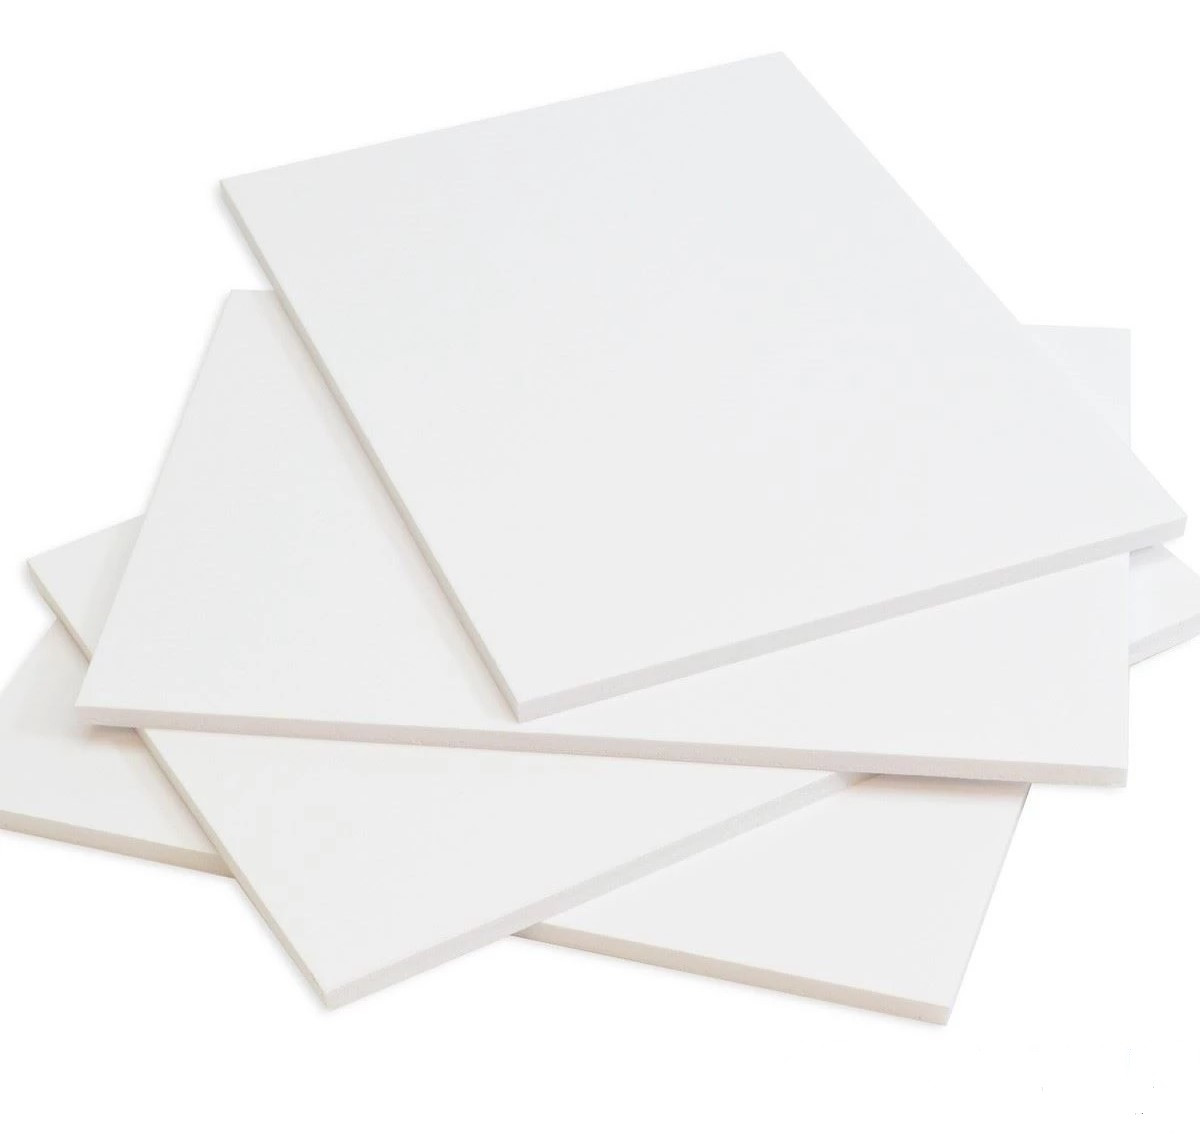 A1 White Self-Adhesive Foamboard 5mm 594 x 840mm X3 Sheets 